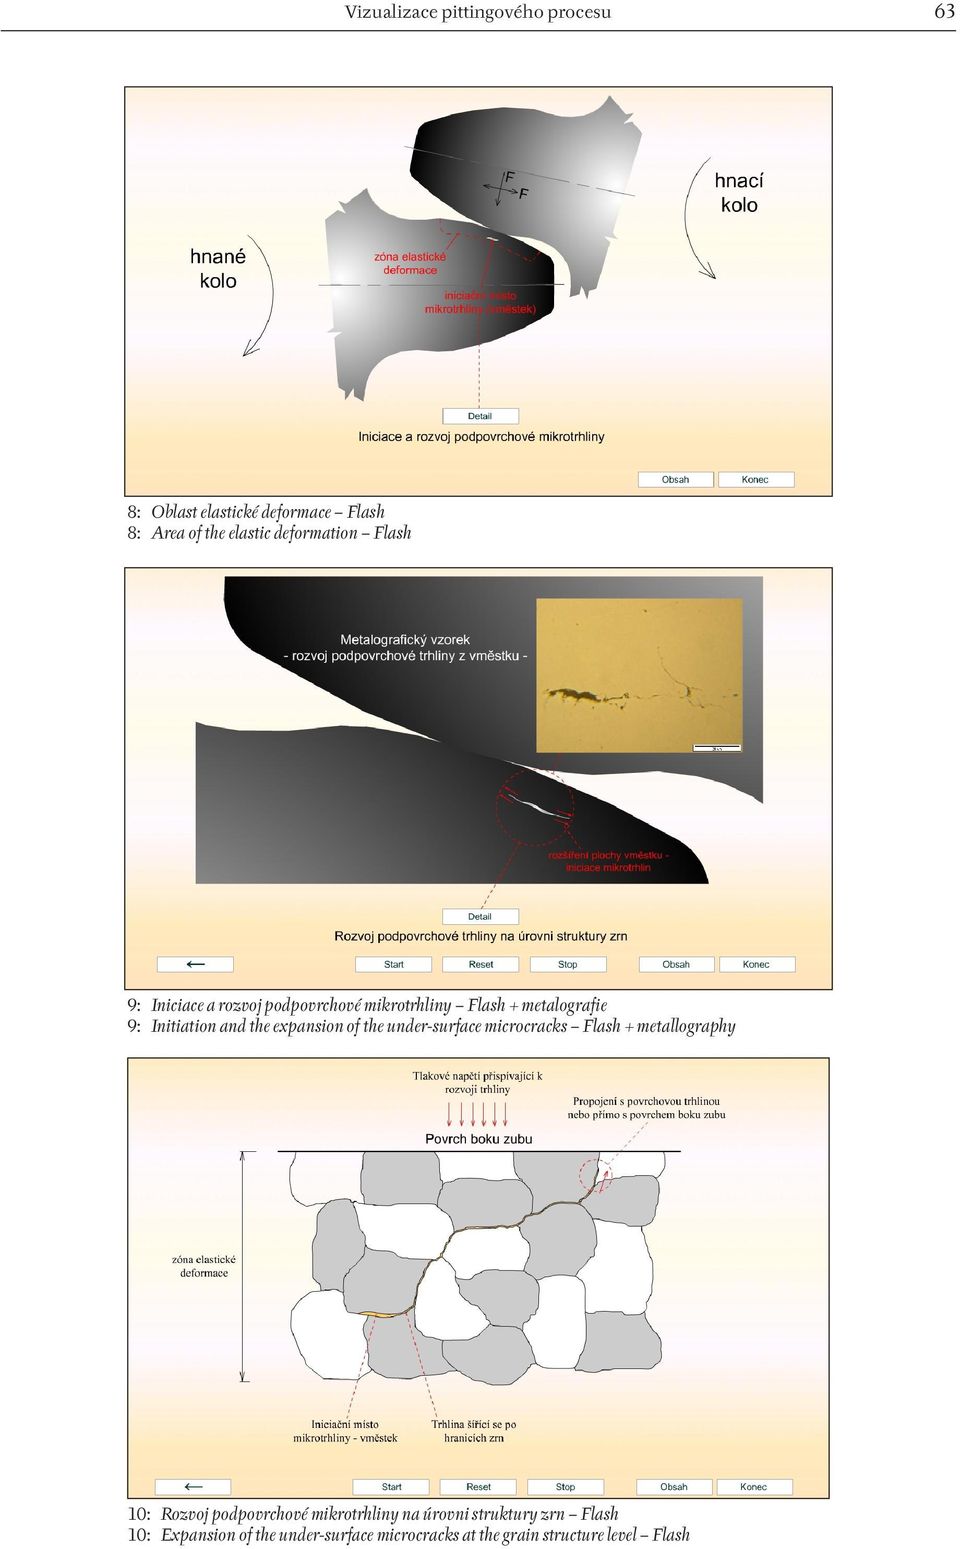 the expansion of the under-surface microcracks Flash + metallography 10: Rozvoj podpovrchové